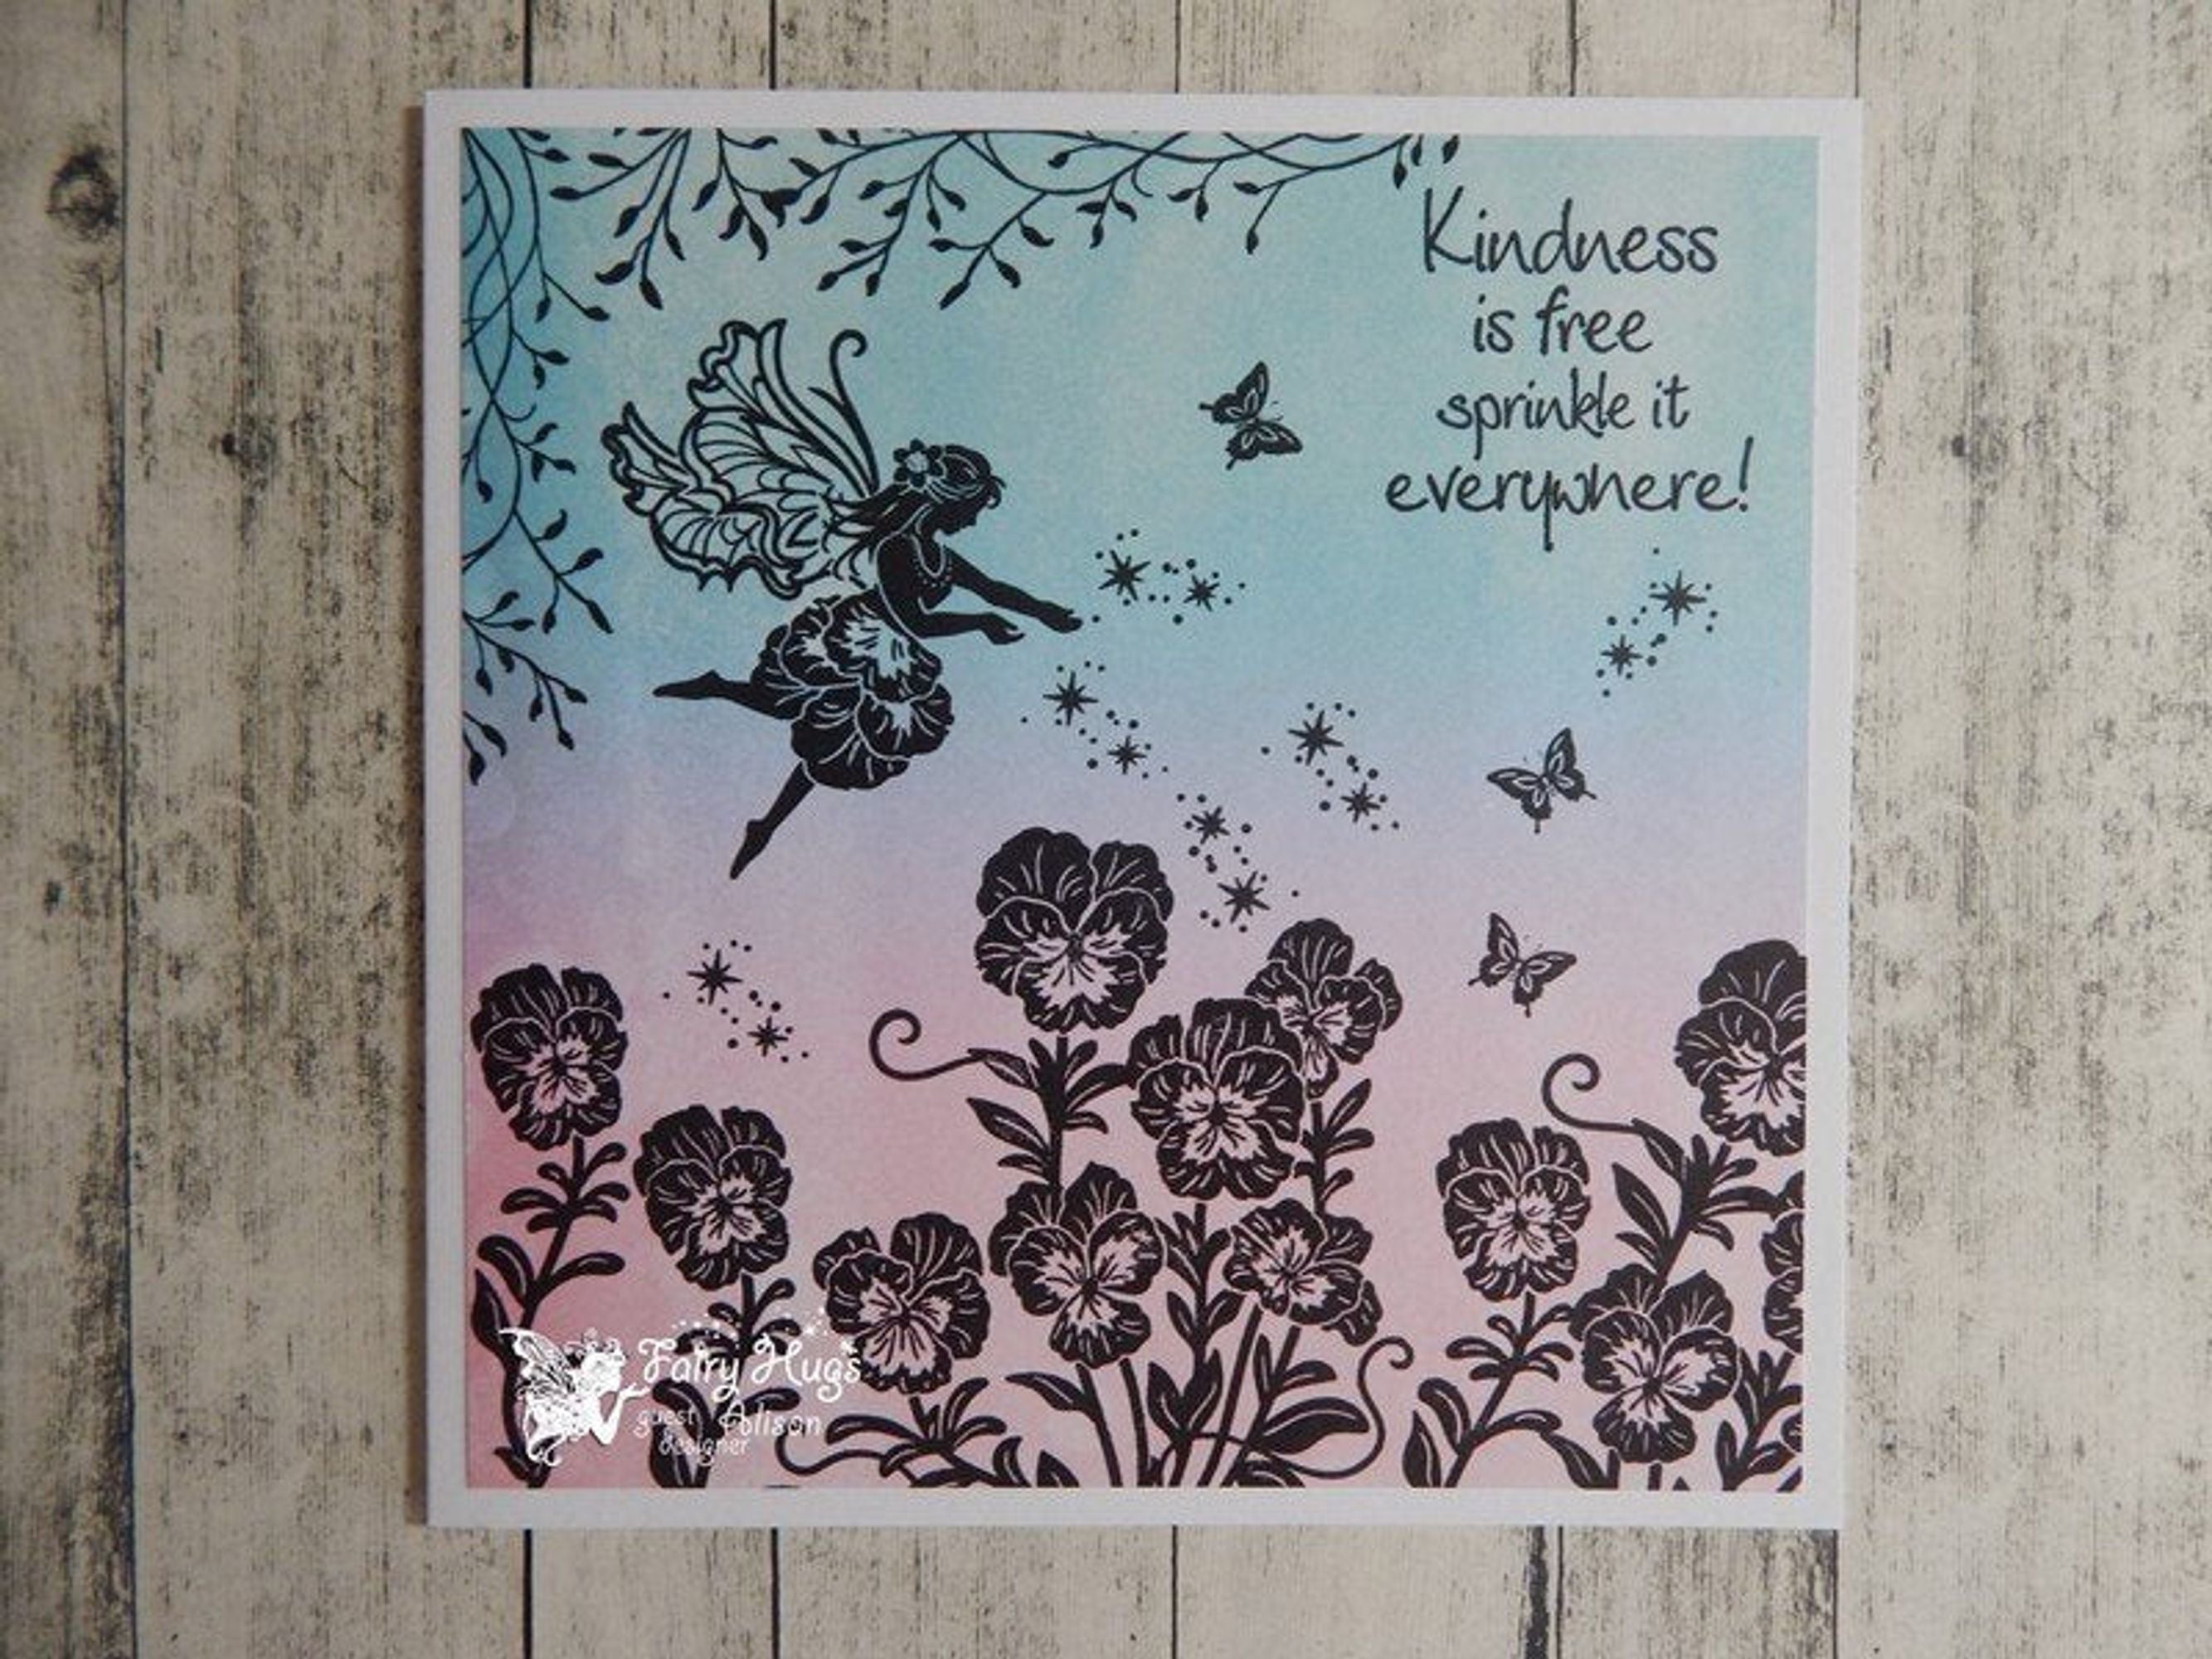 Fairy Hugs Stamps - Sprinkle Kindness